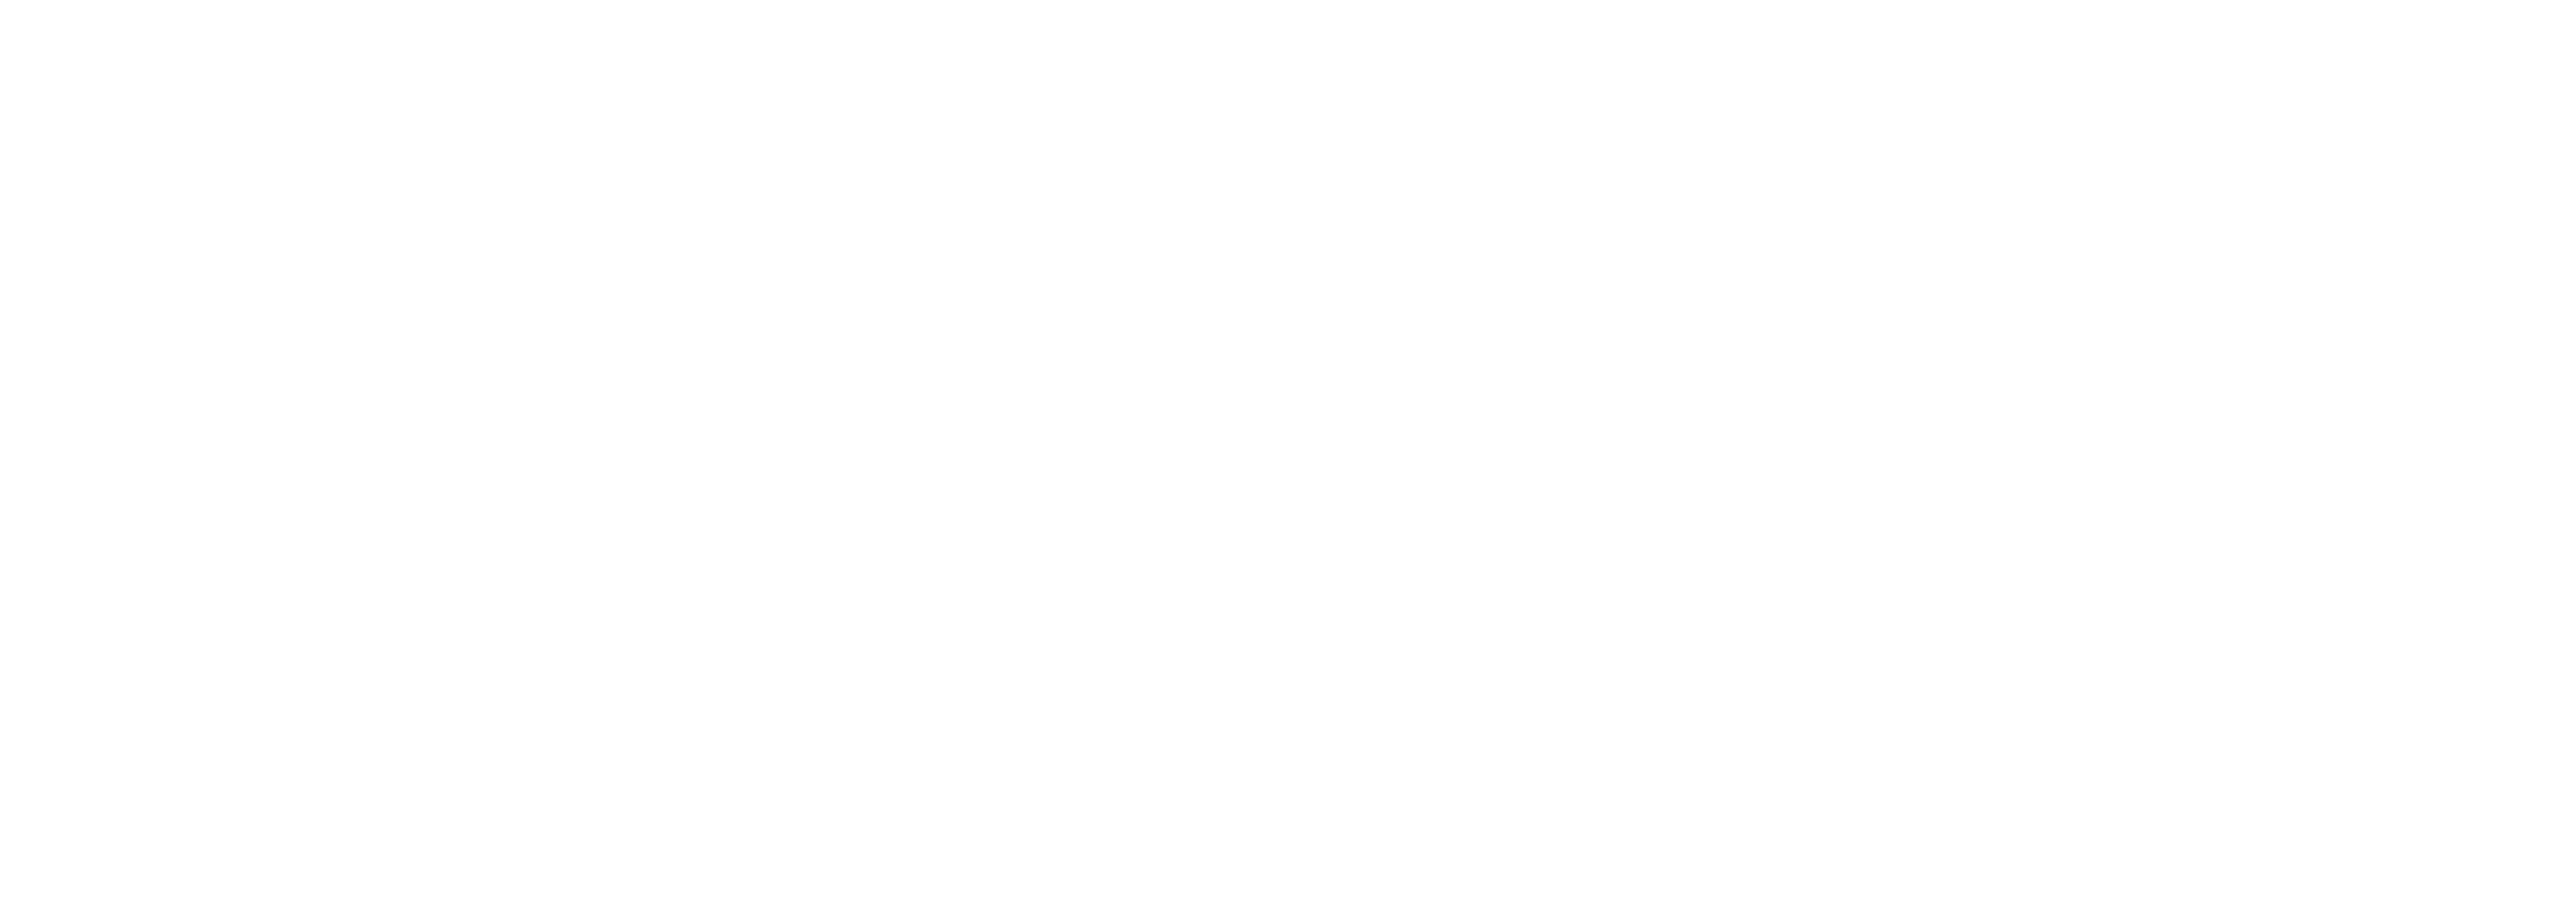 Visit Cheyenne